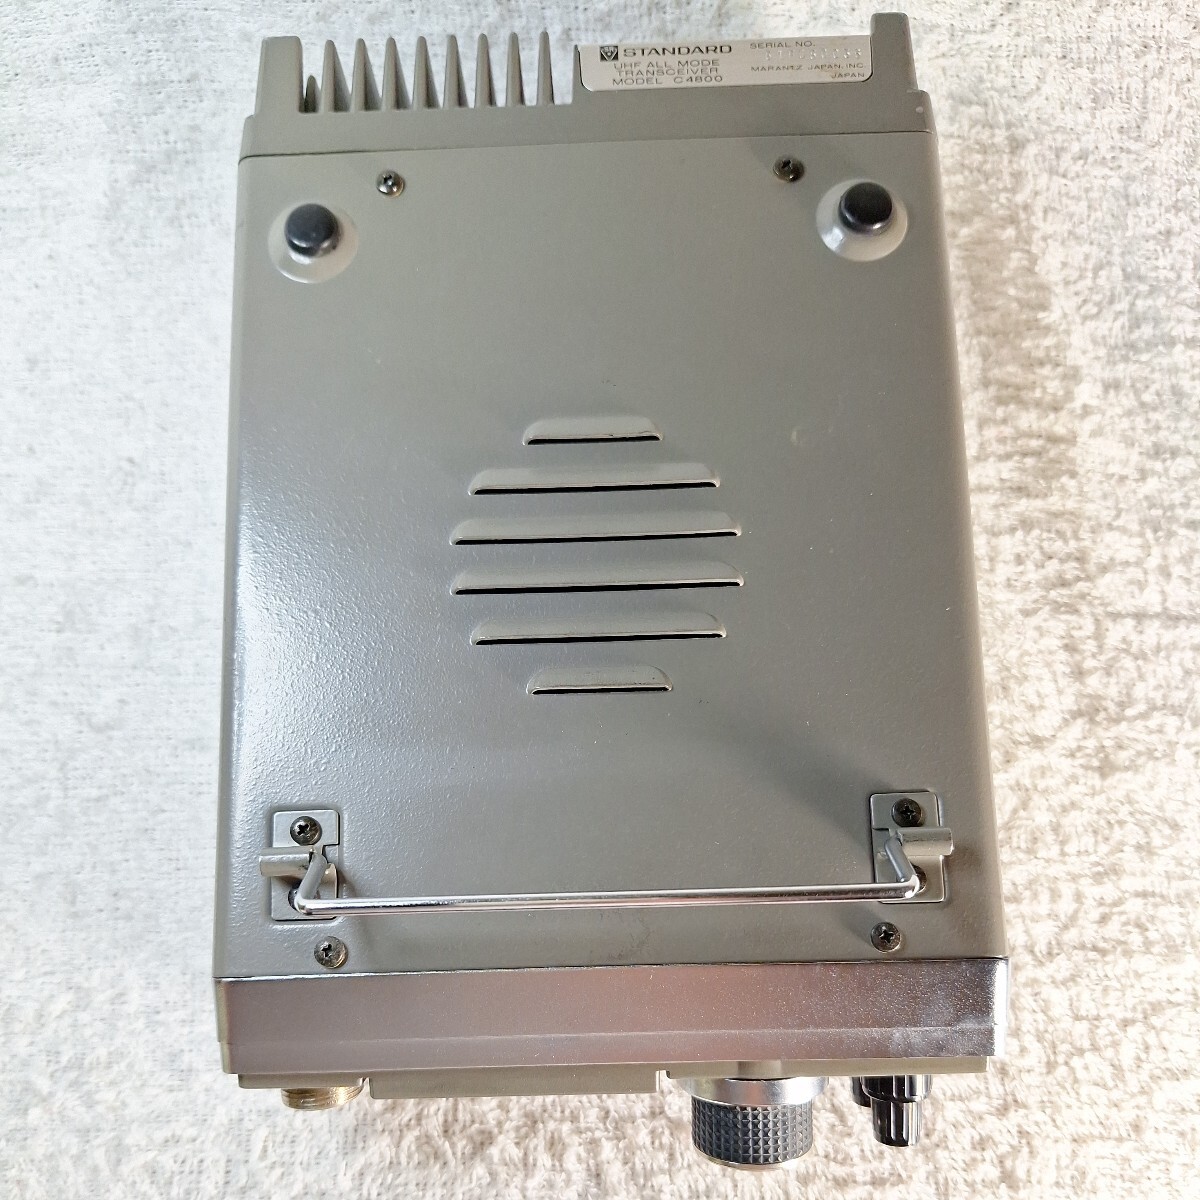 C4800 STANDARD/ standard Japan Marantz 430M Hz band all mode transceiver 10W secondhand goods junk treatment 